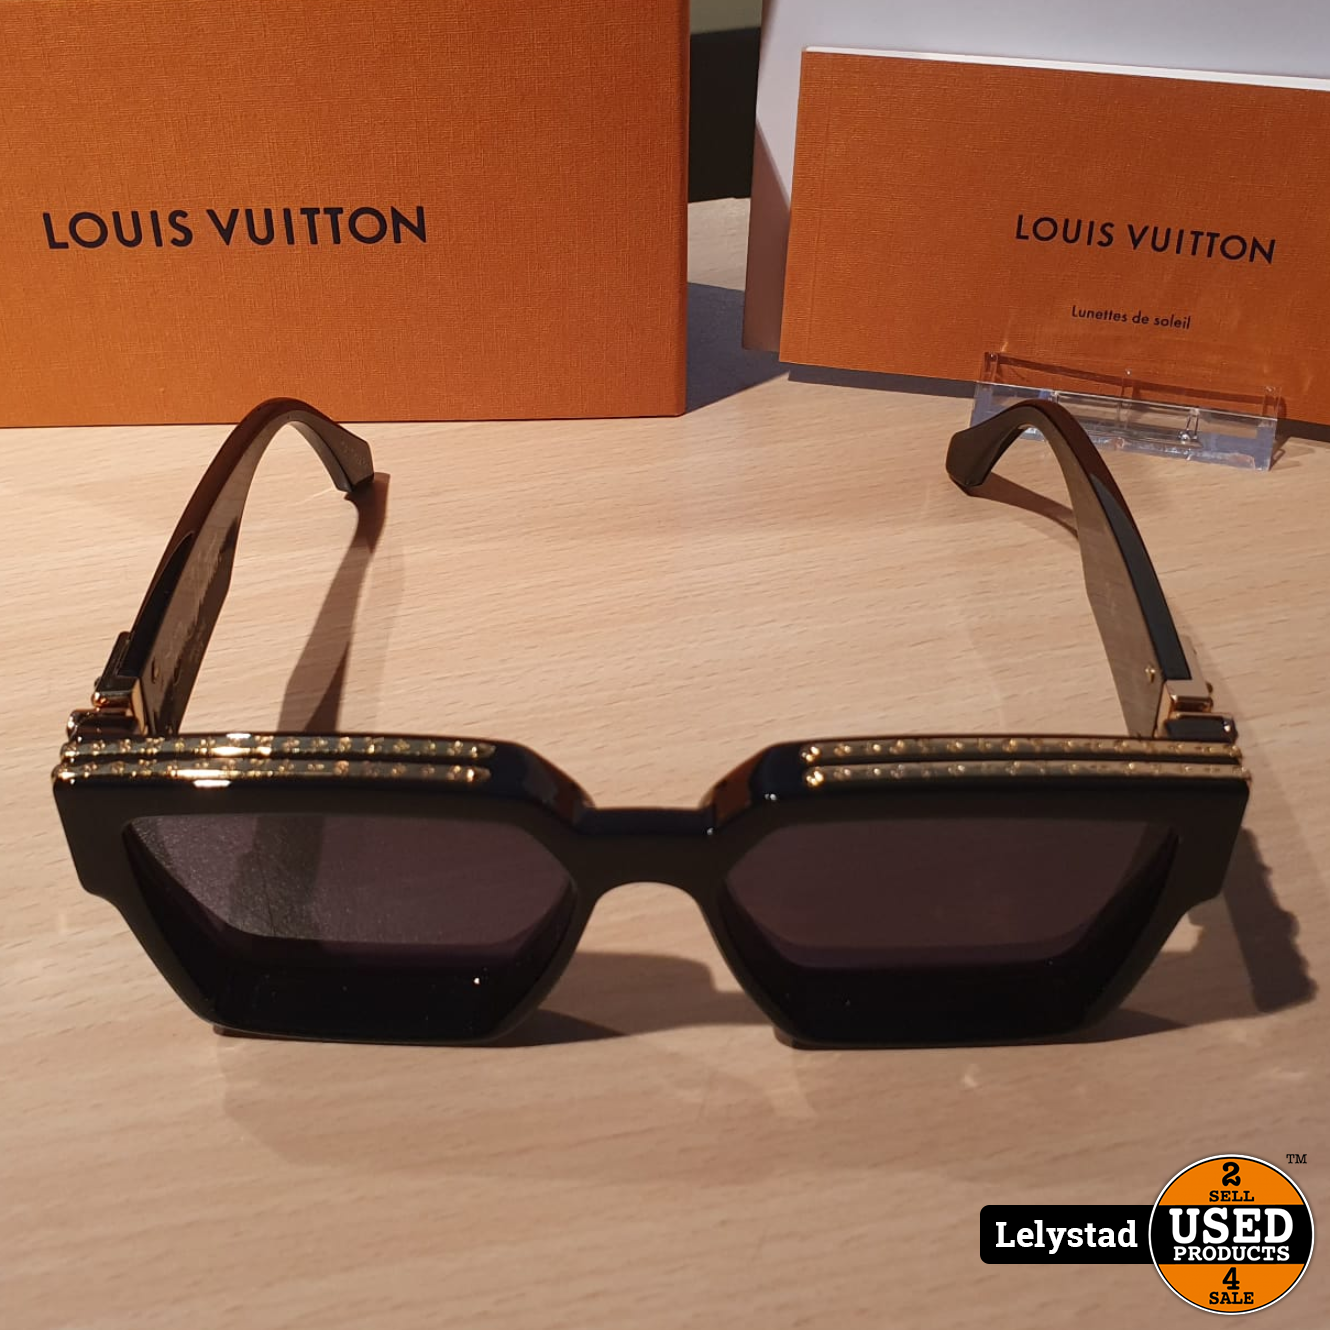 Visser samenwerken verkiezen Louis Vuitton 1.1 Millionaires Sunglasses One Size Black Z1165W 93L |  Absolute Nieuwstaat + Bon - Used Products Lelystad